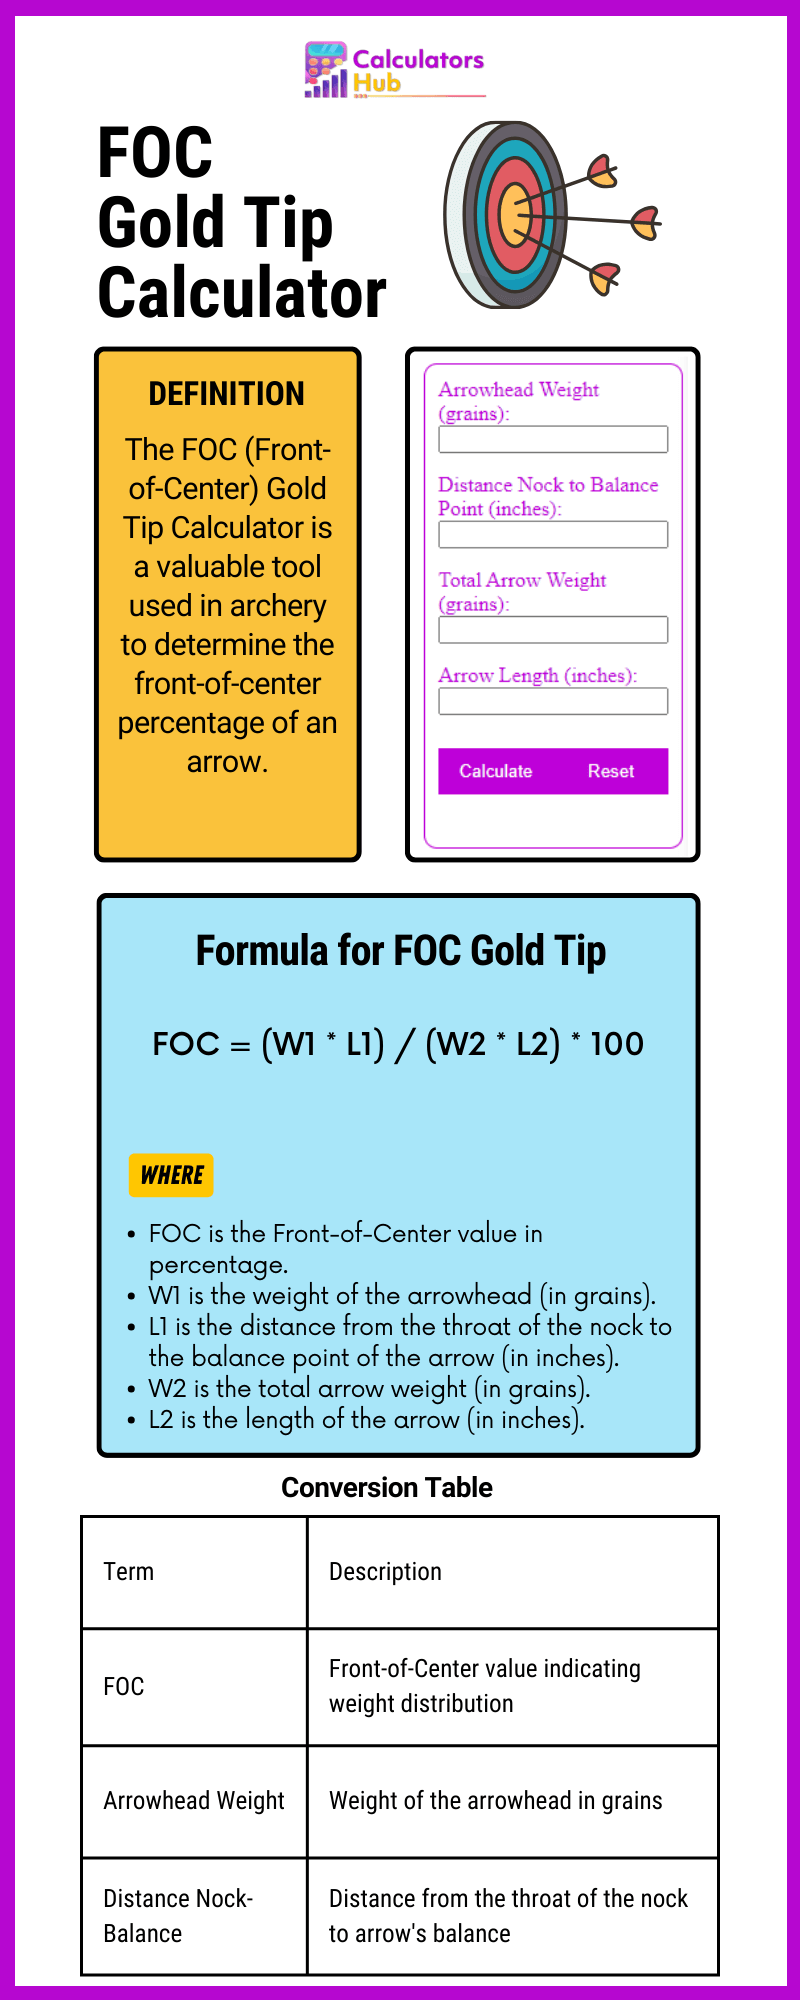 FOC Gold Tip Calculator